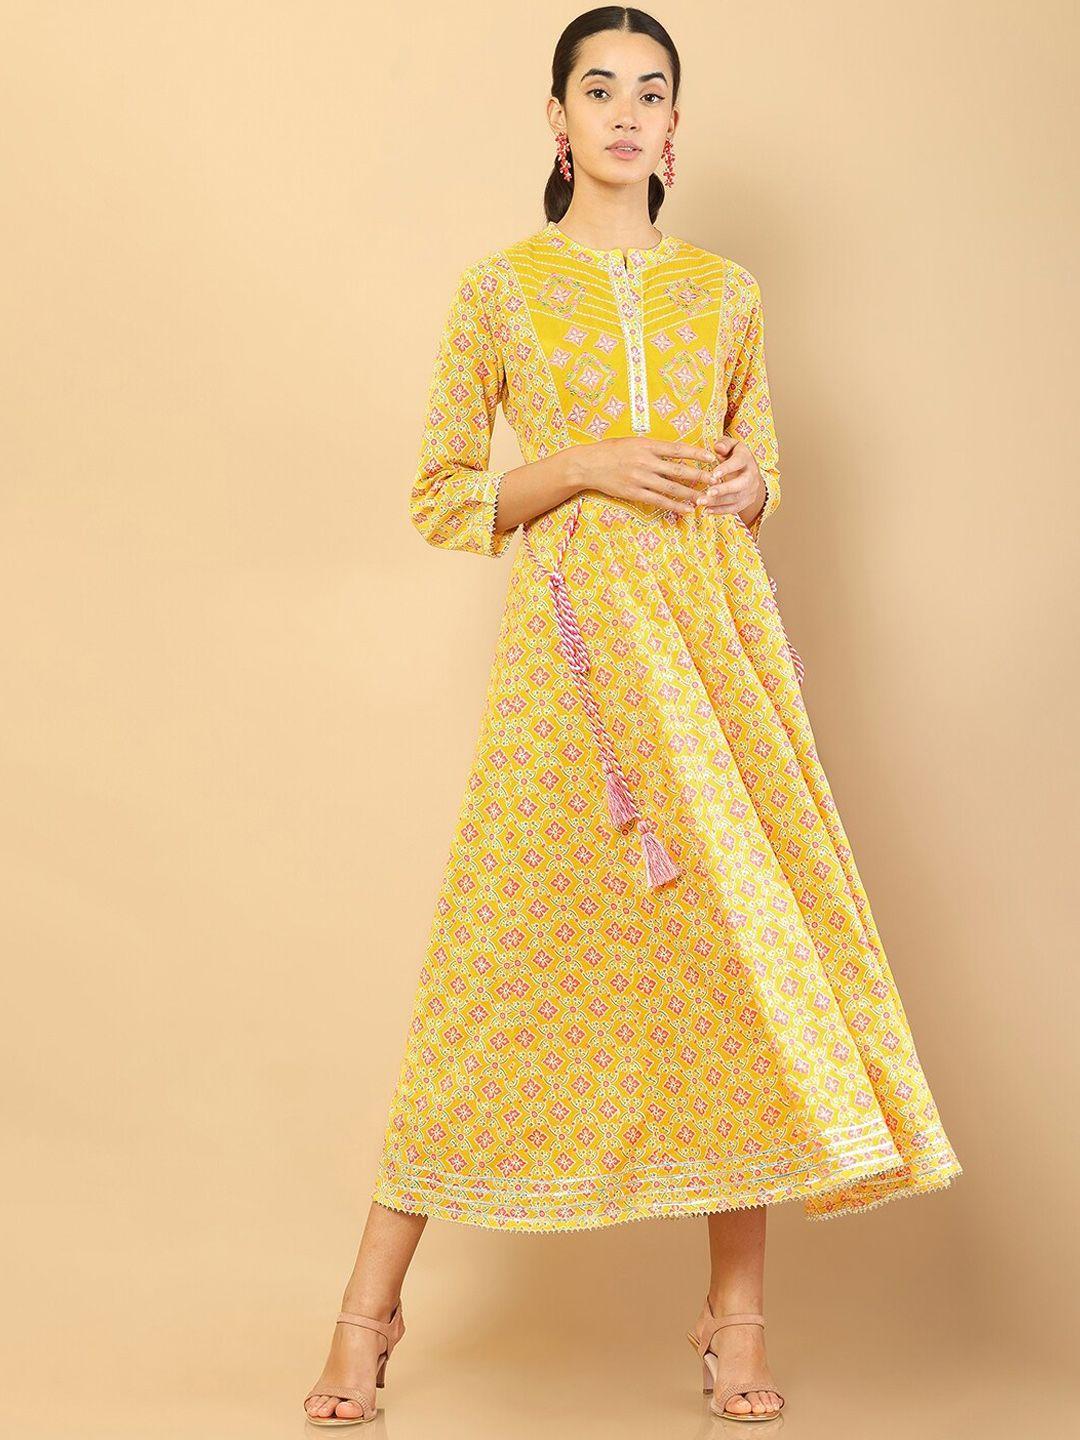 soch-women-yellow-floral-printed-floral-anarkali-ethnic-dress